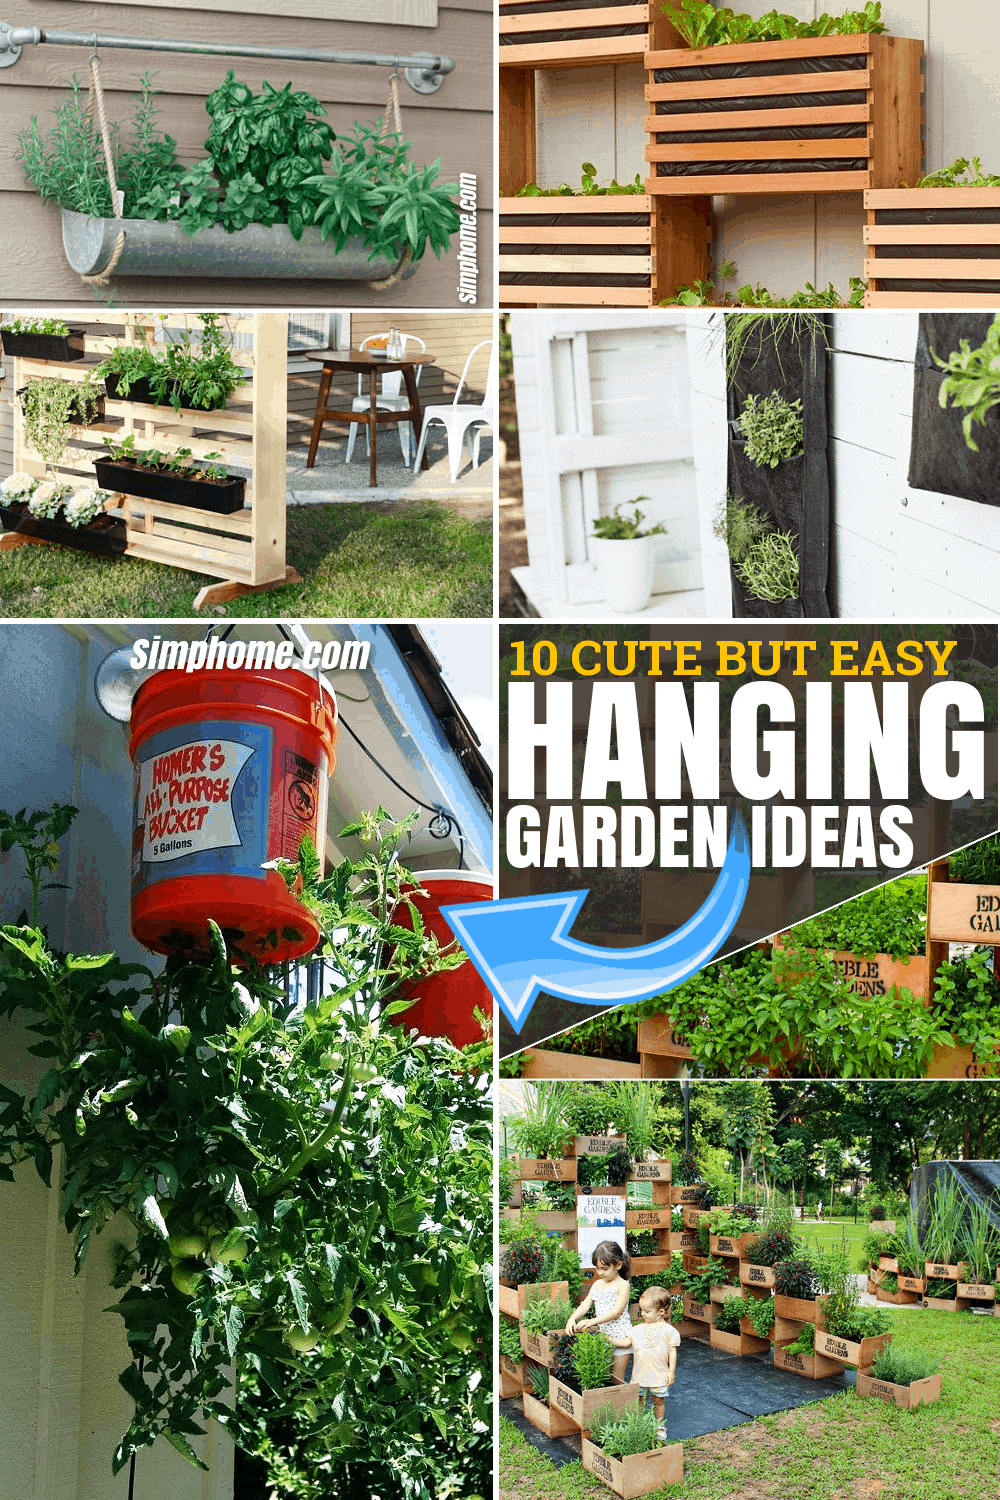 10 cute but easy hanging garden ideas via SIMPHOME.COM Featured Pinterest Image